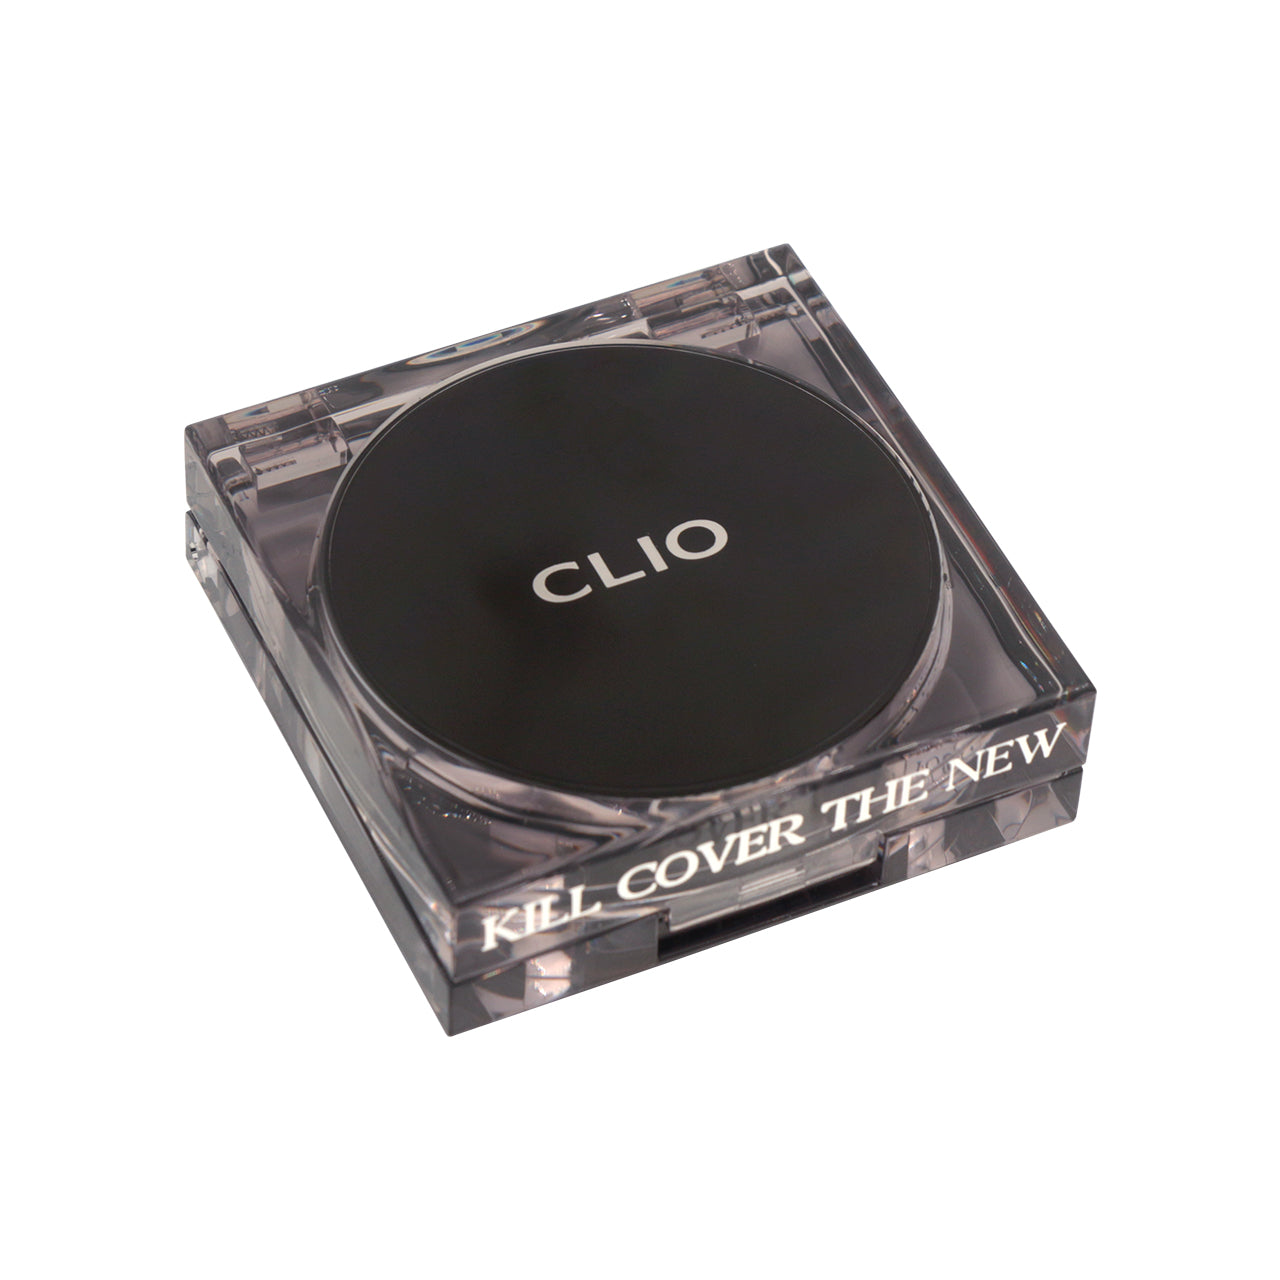 Clio SPF50+PA+++ Mini Kill Cover The New Founwear Cushion #02 5g